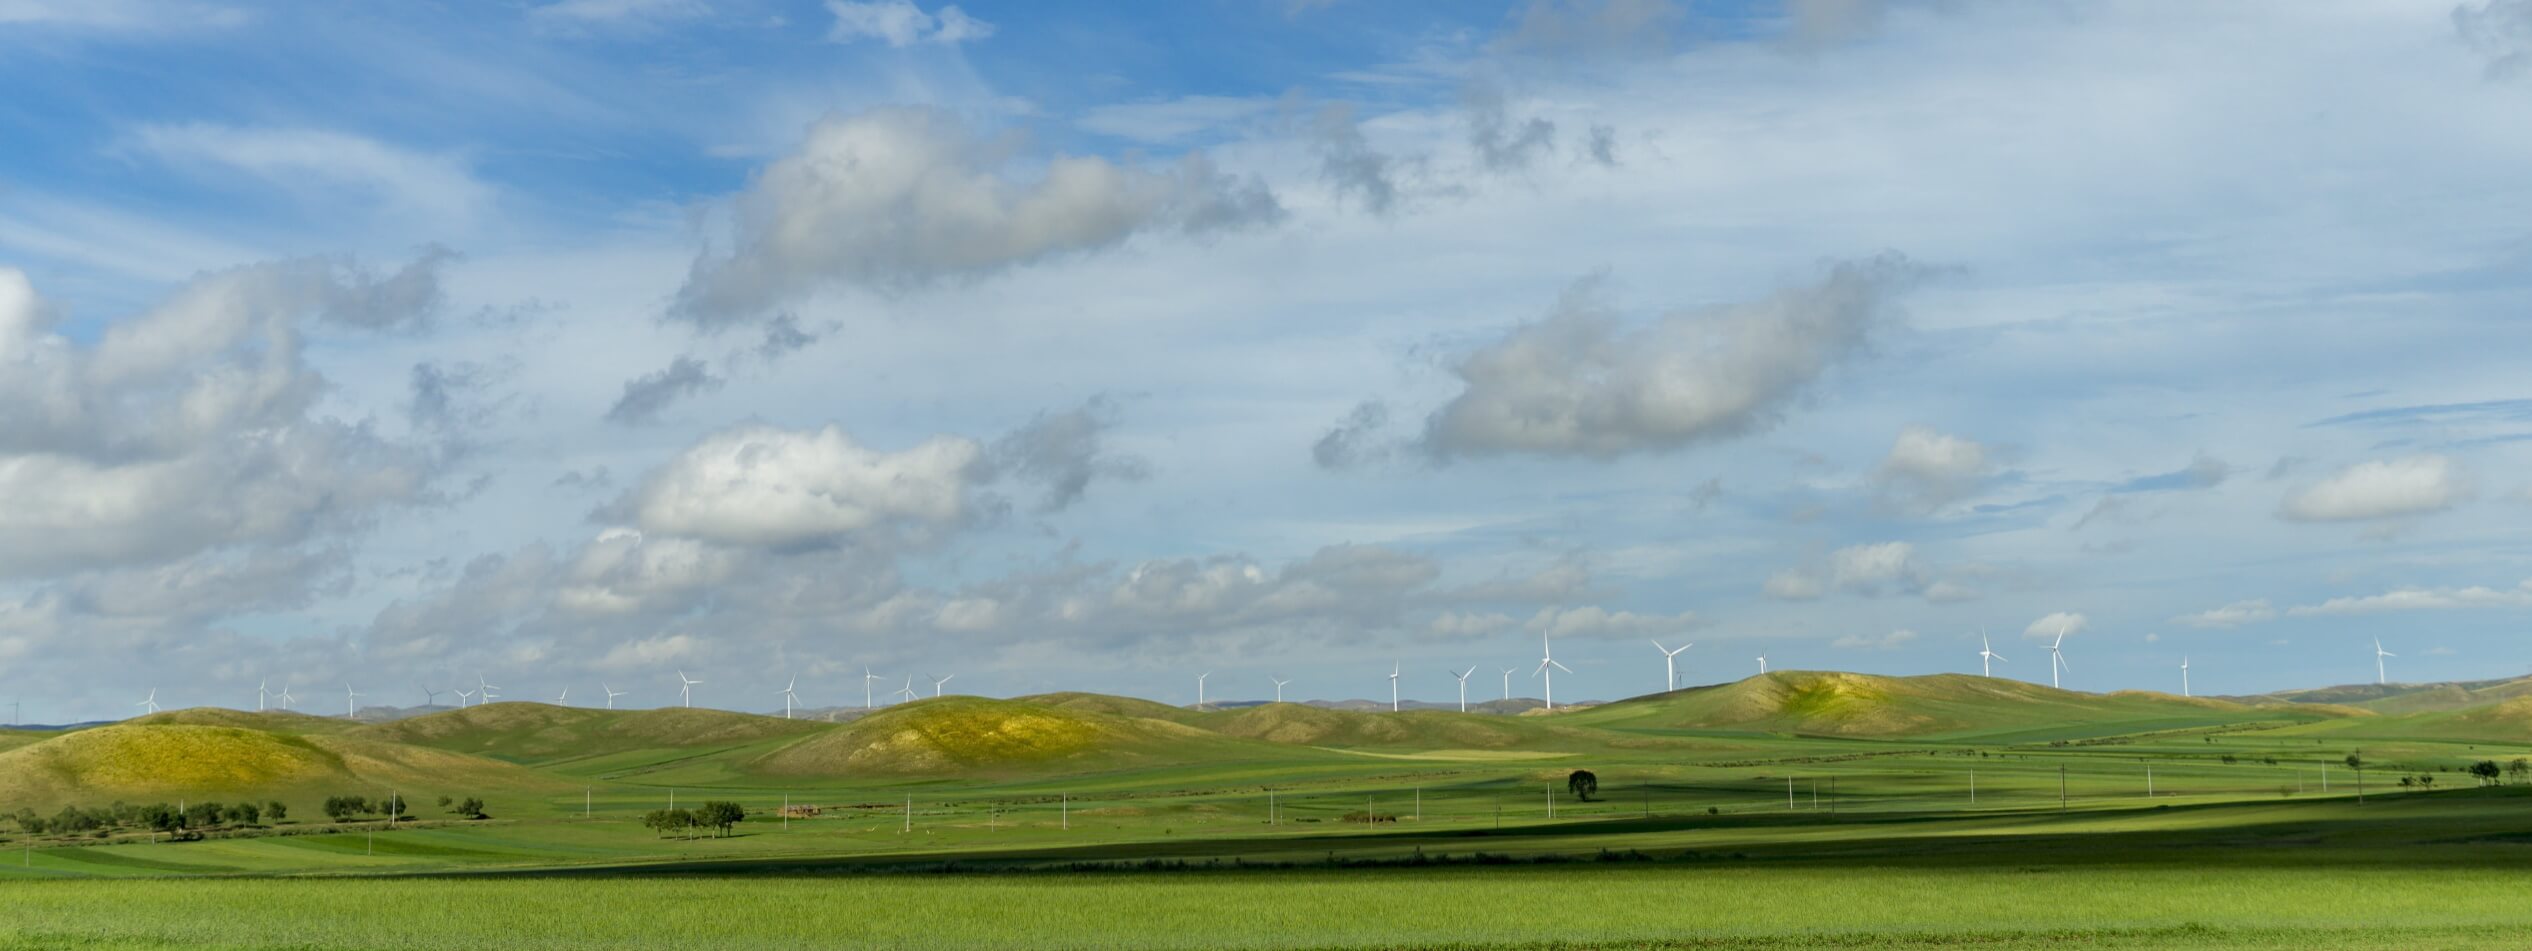 Windmills grasslands